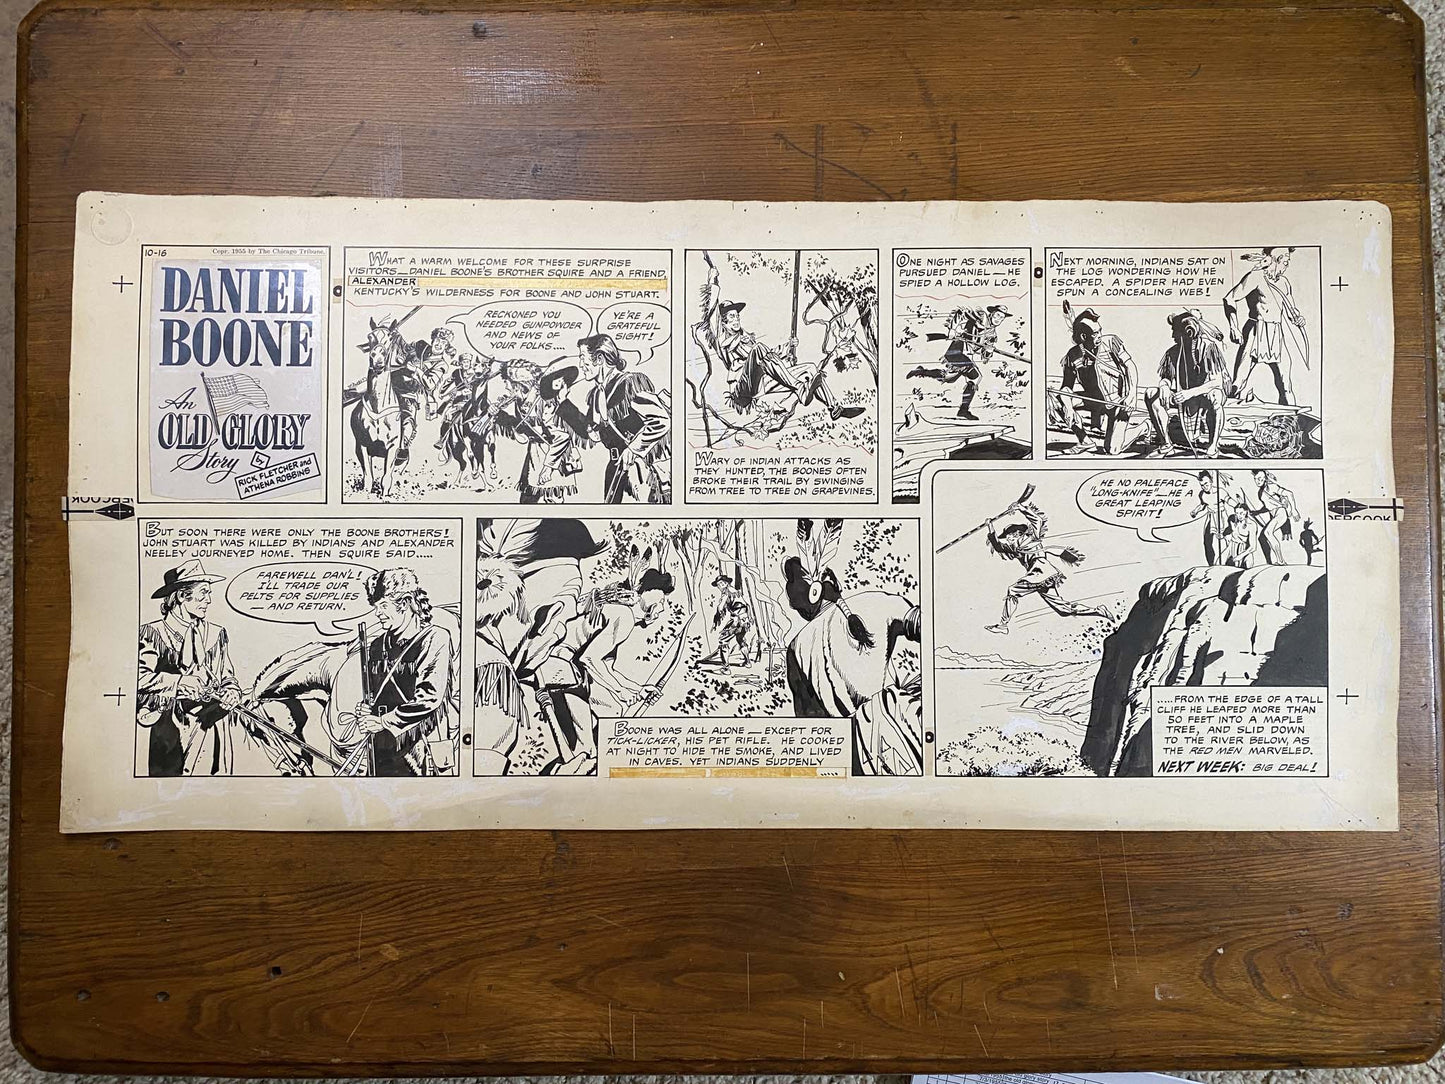 Daniel Boone: An Old Glory Story 10/16/55 Original Art Illustration | Fletcher Studio